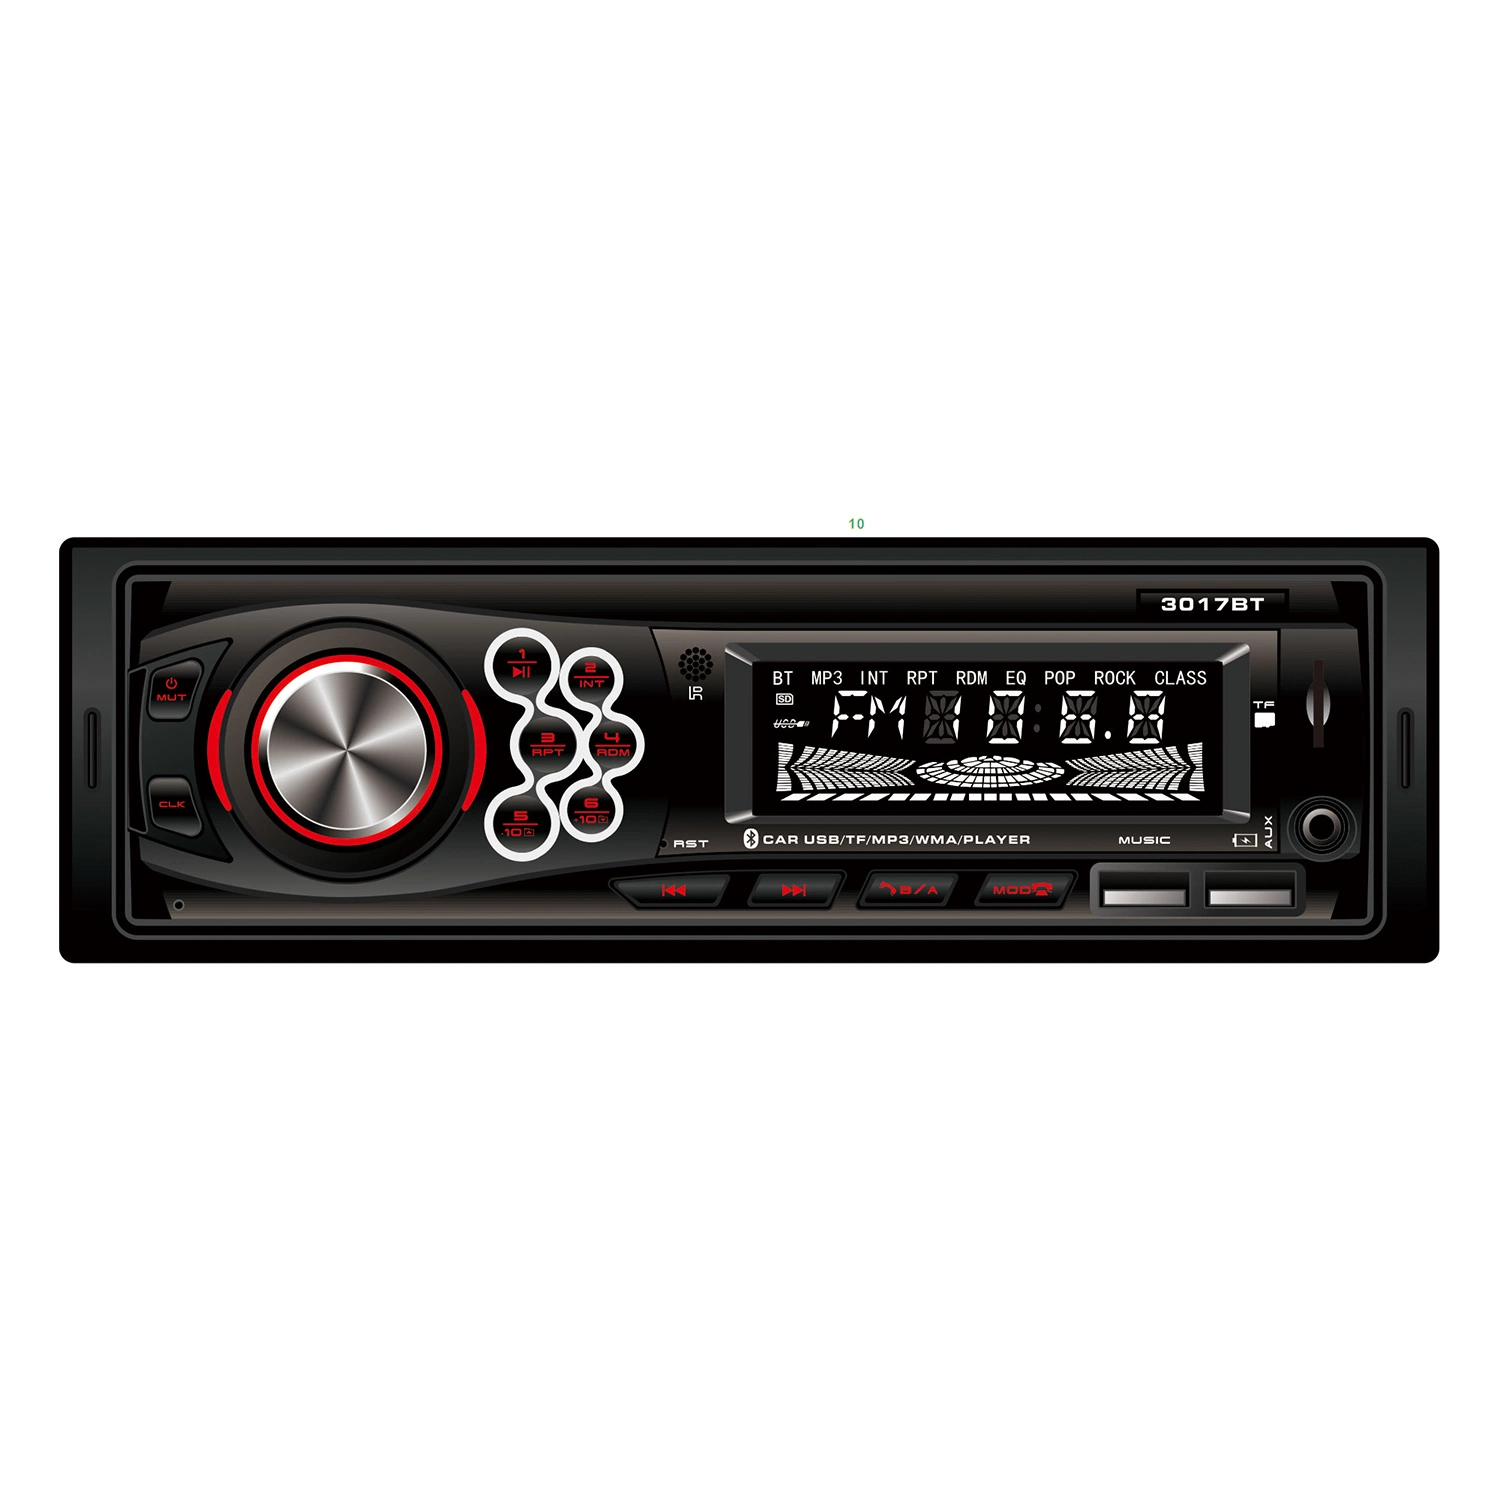 Autozubehör Stereo MP3 Audio-Player LCD-Display Radio